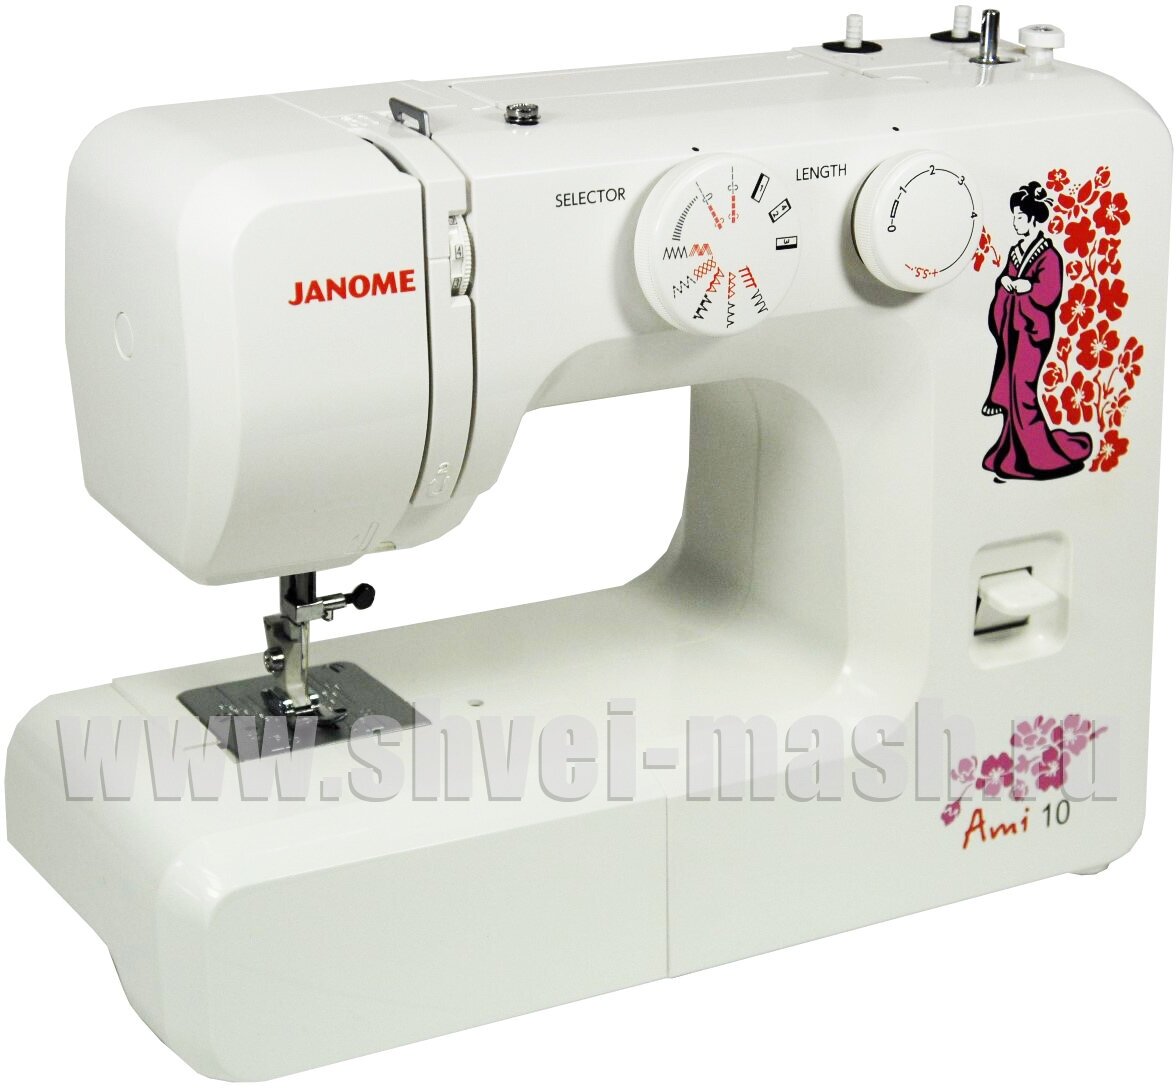 Швейная машина JANOME Ami 10